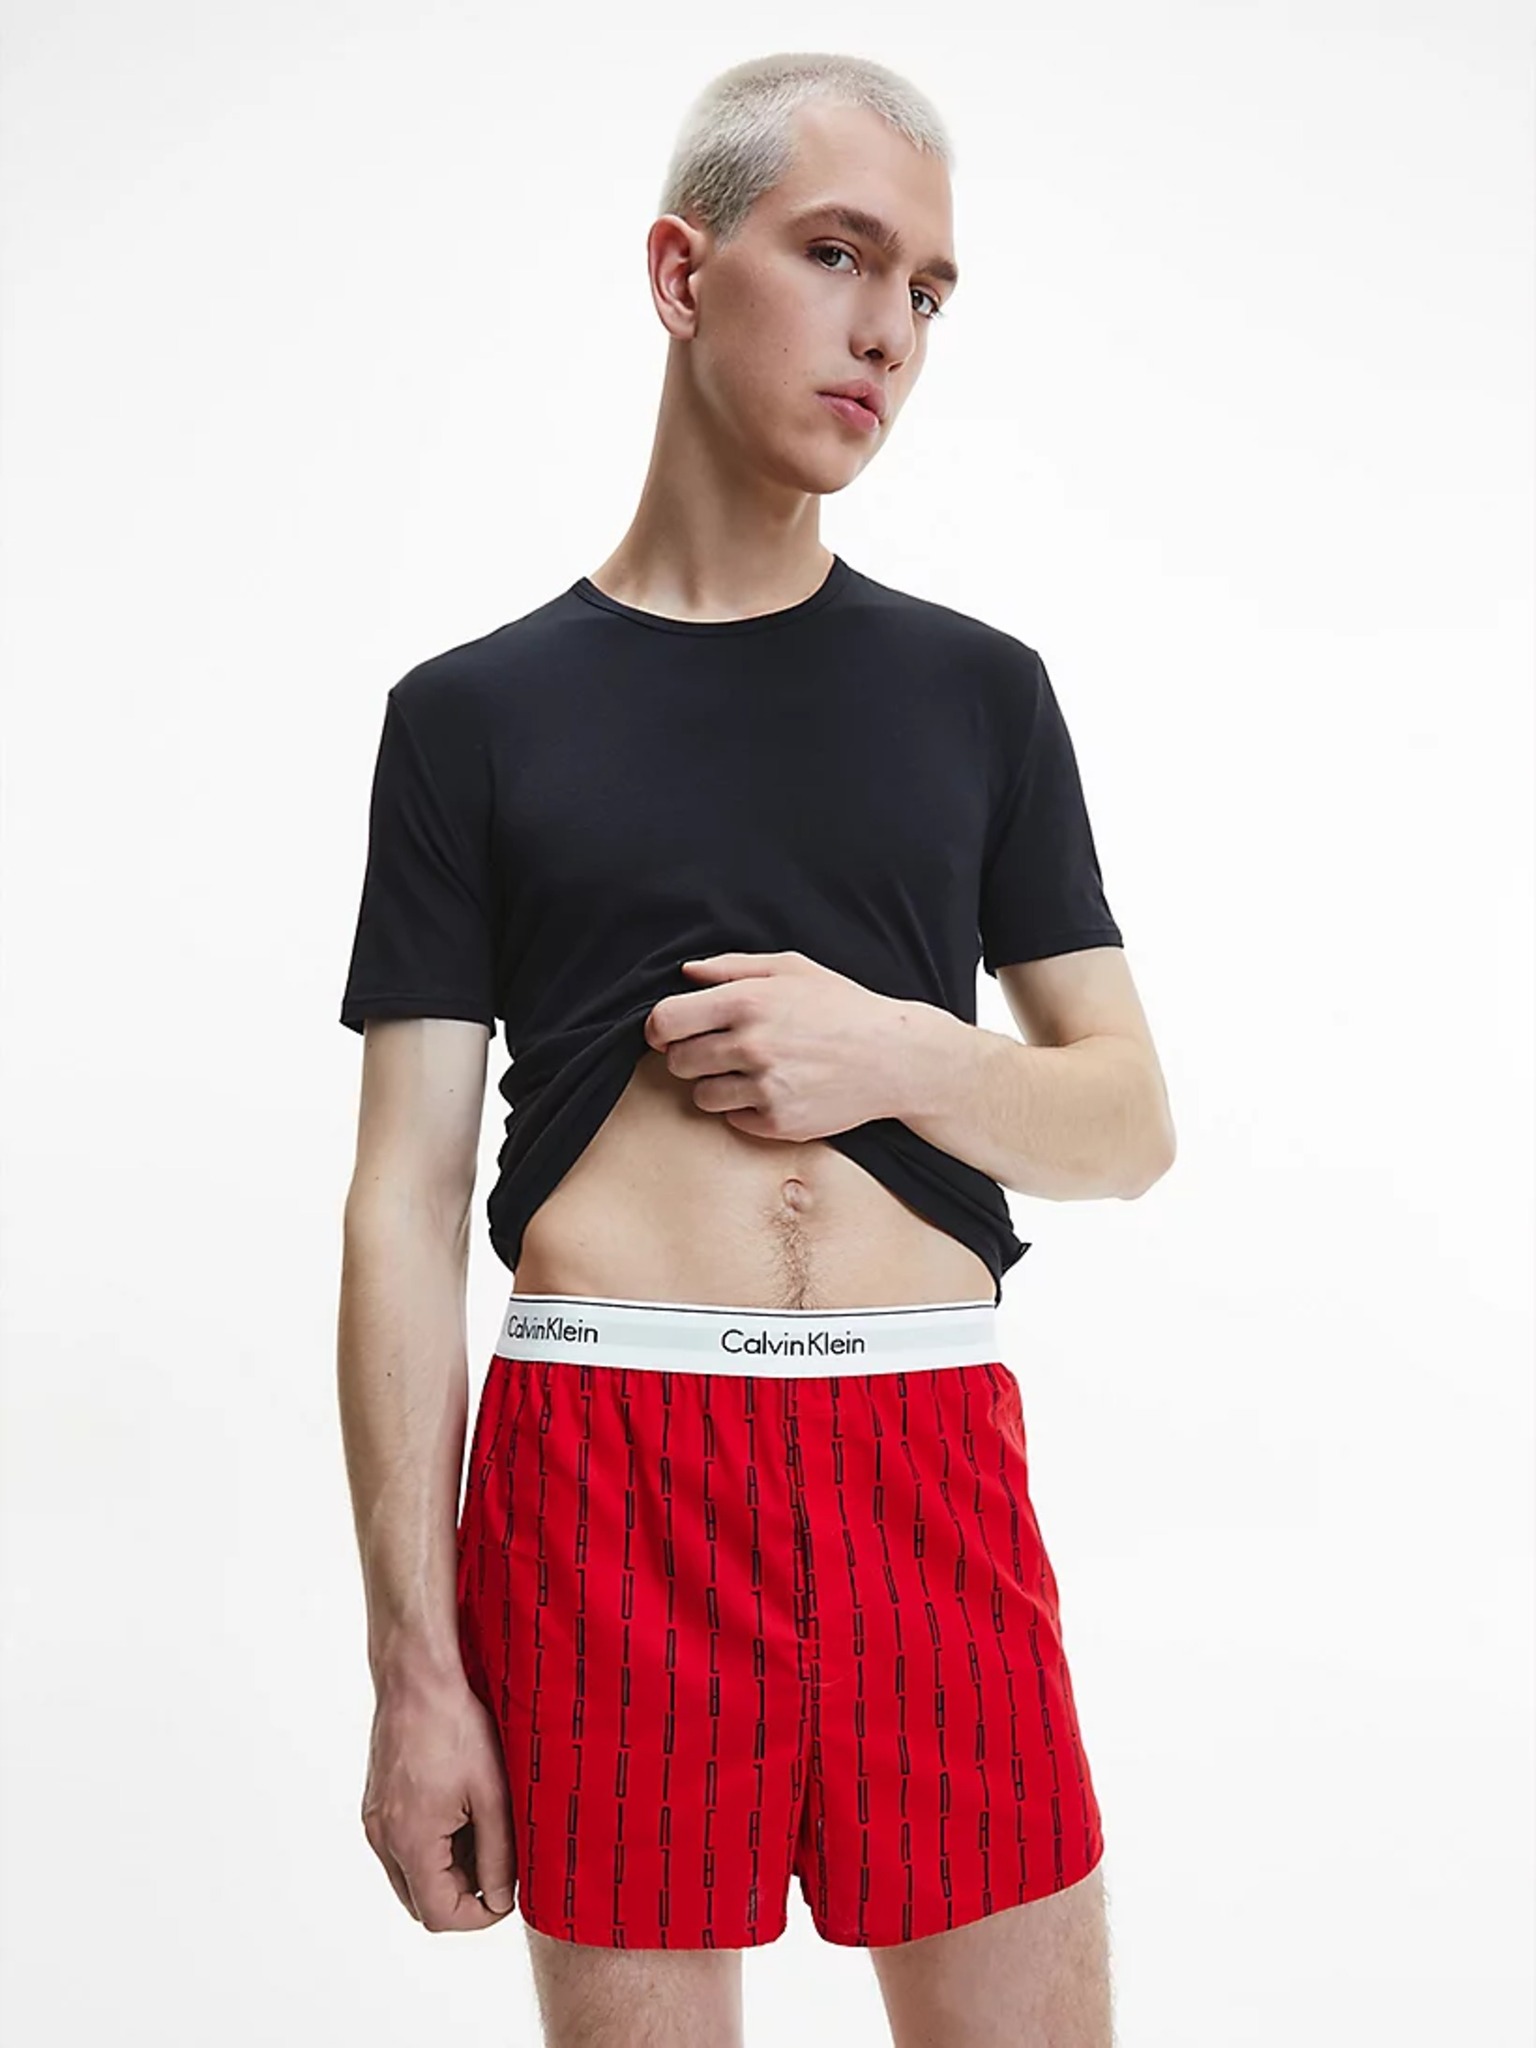 Calvin Klein Underwear - Set of T-shirts and boxer shorts